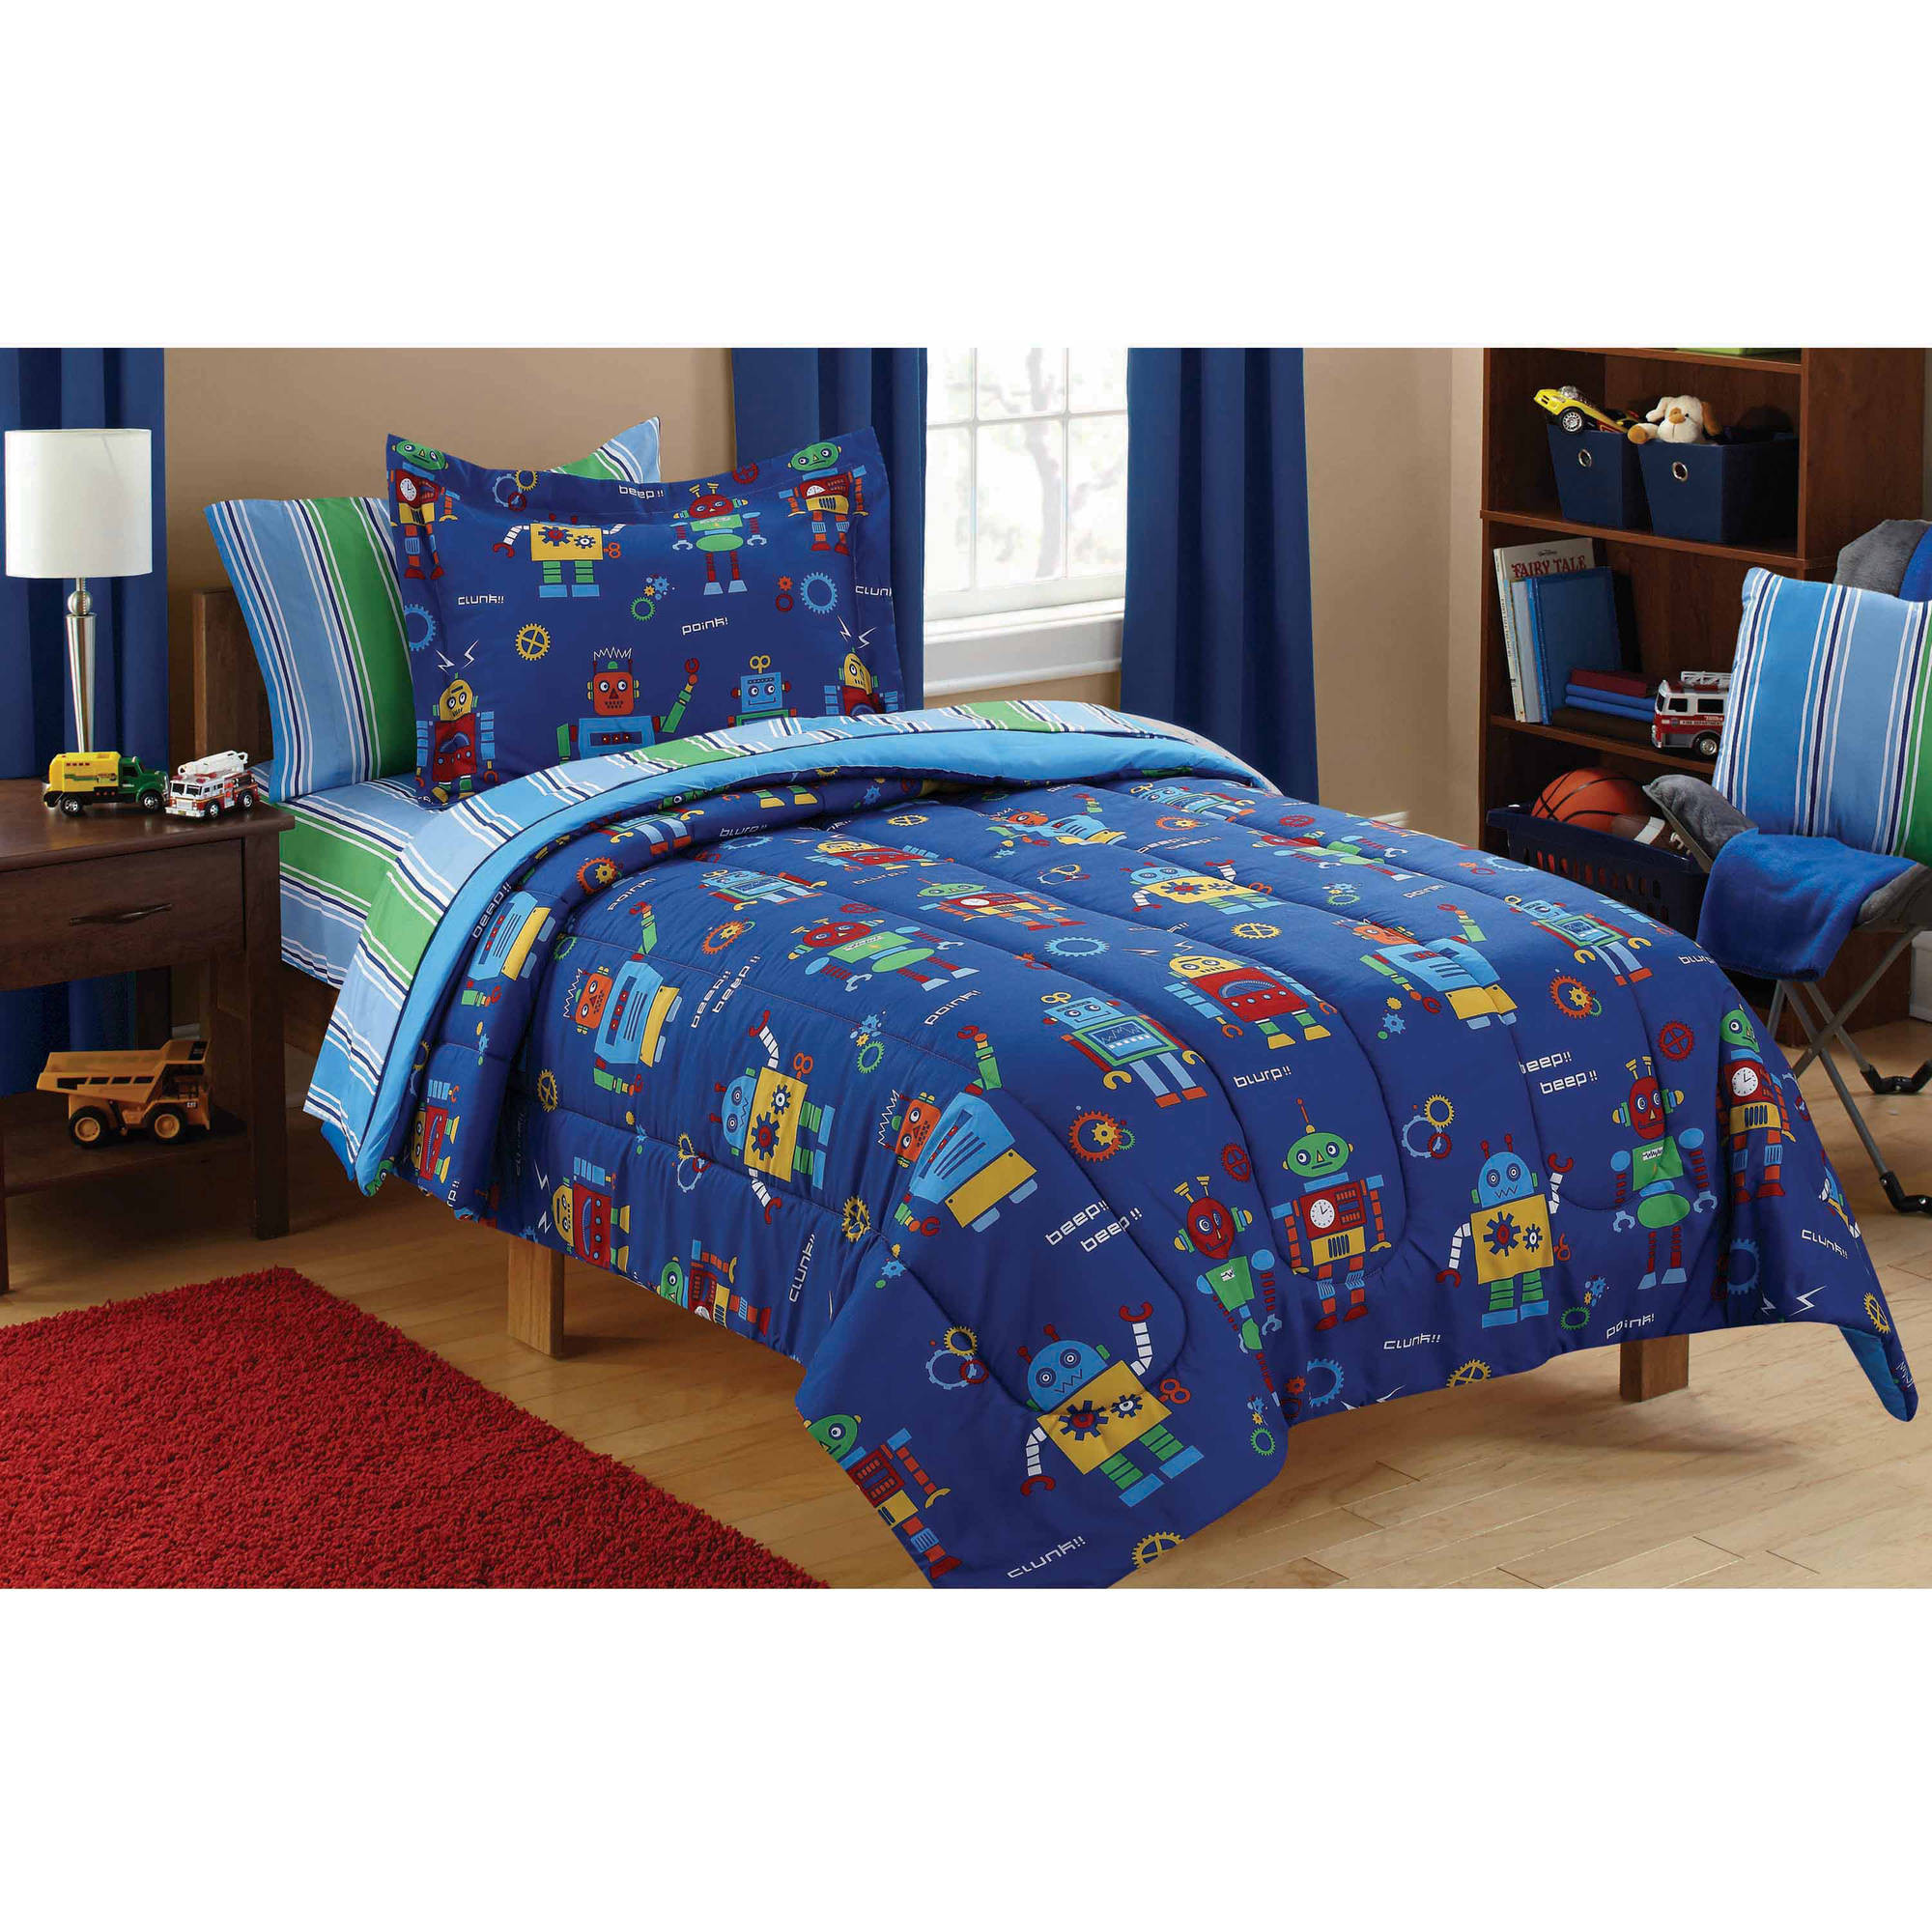 Kids Bedroom Set Walmart
 Mainstays Kids Robots Bed in a Bag Coordinating Bedding